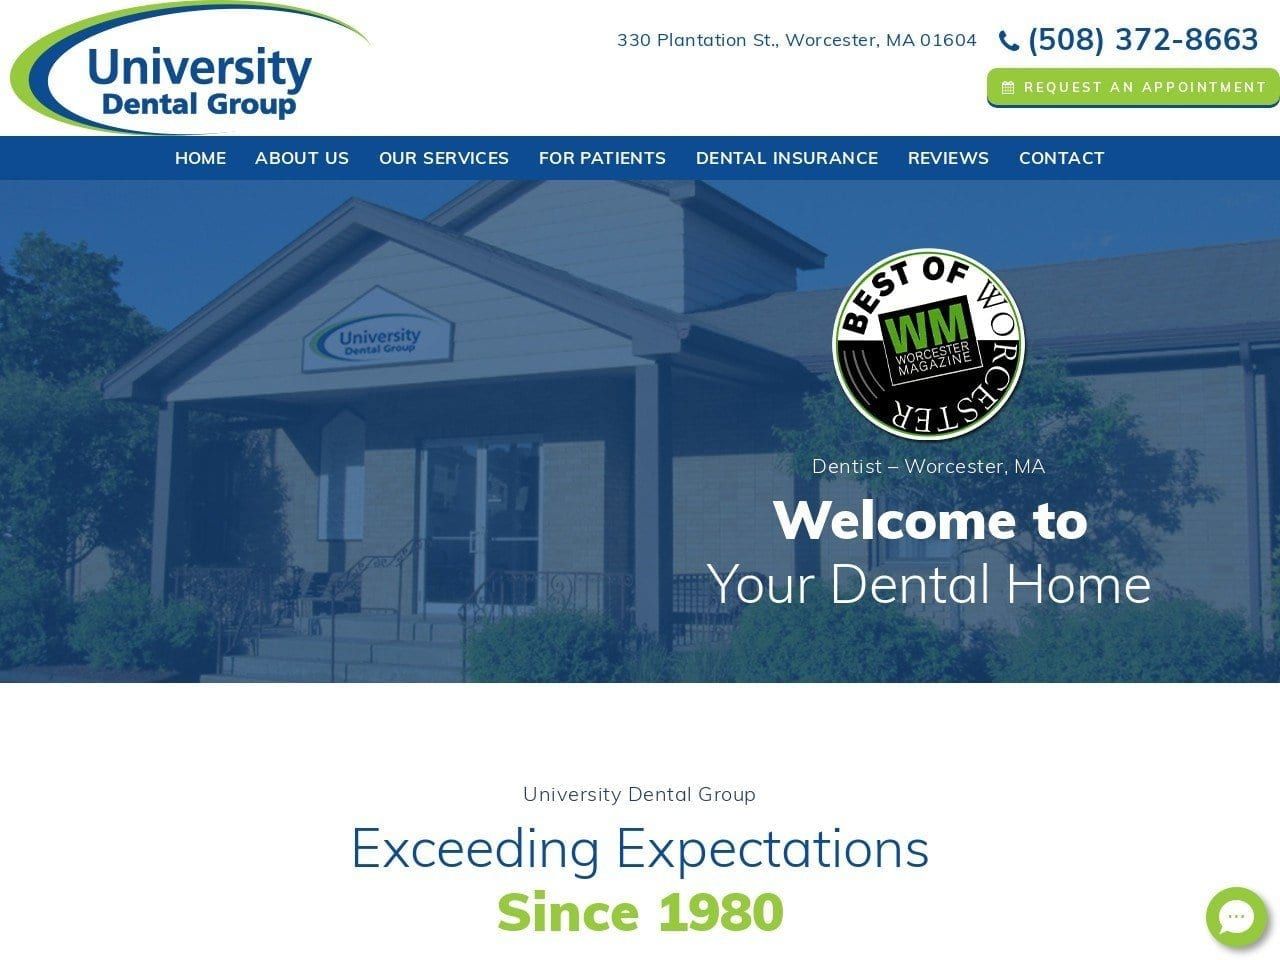 University Dental Group Website Screenshot from universitydentalgroup.com